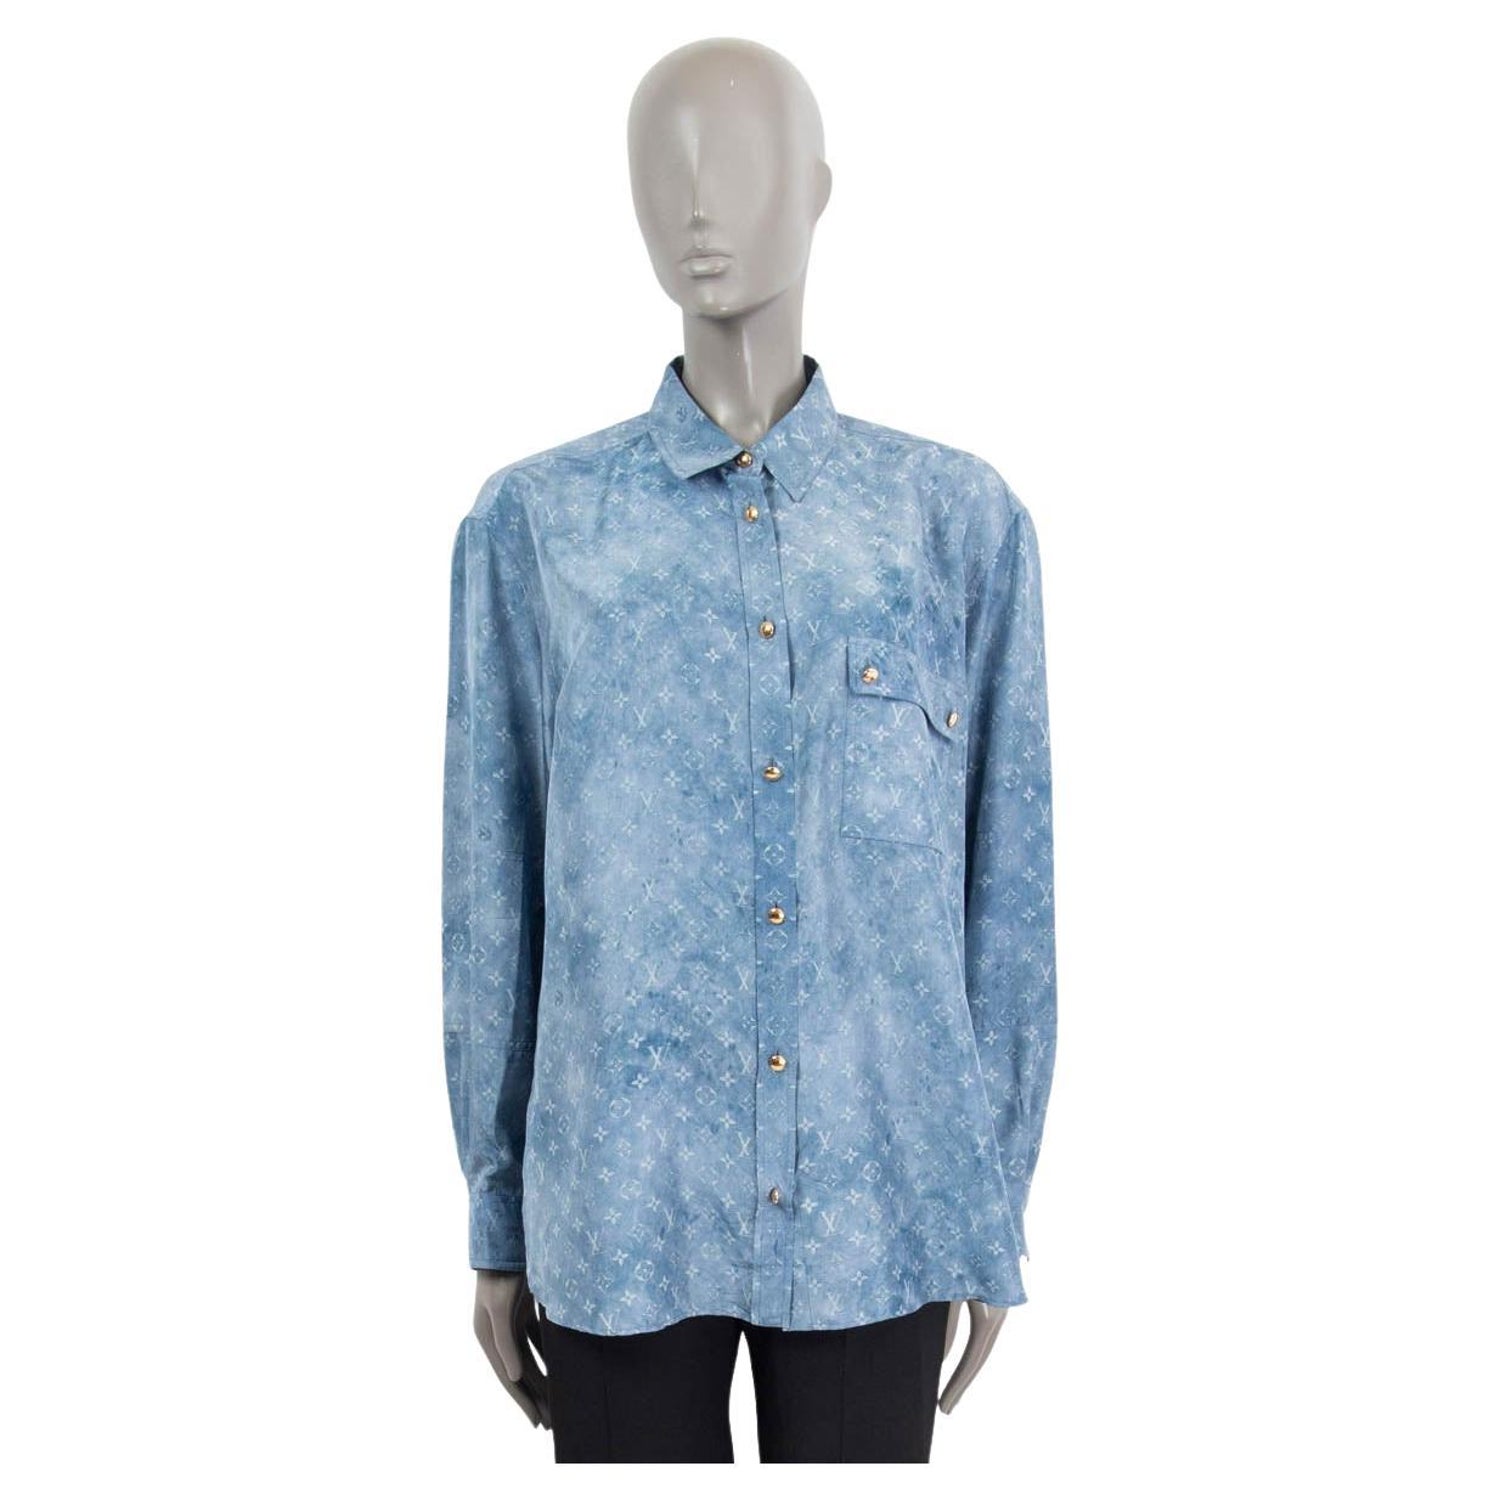 Louis Vuitton Cloud Shirt - 2 For Sale on 1stDibs